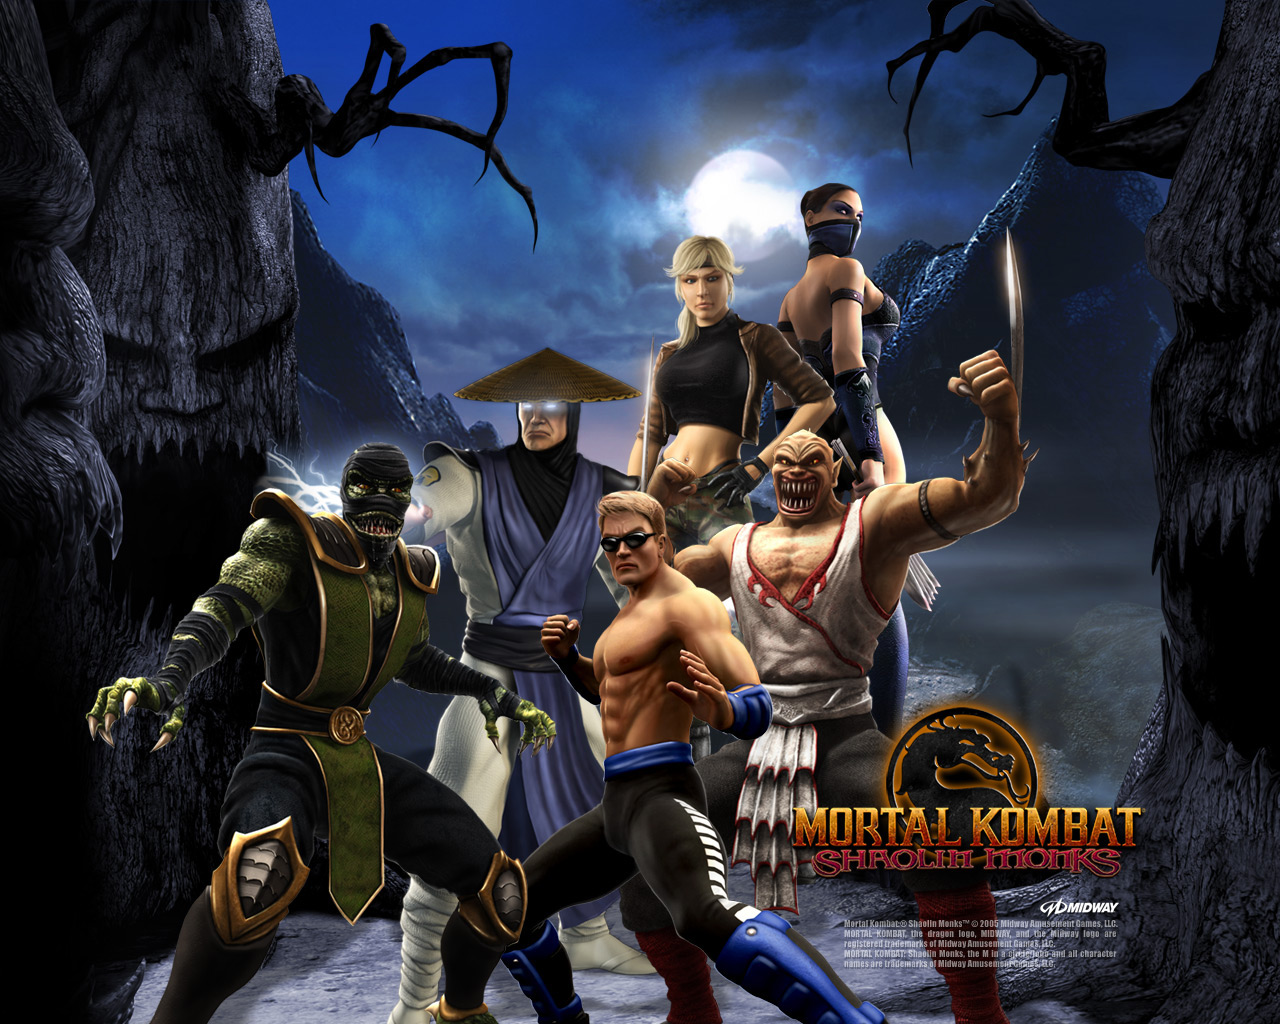 Download High quality Mortal Kombat wallpaper / Games / 1280x1024